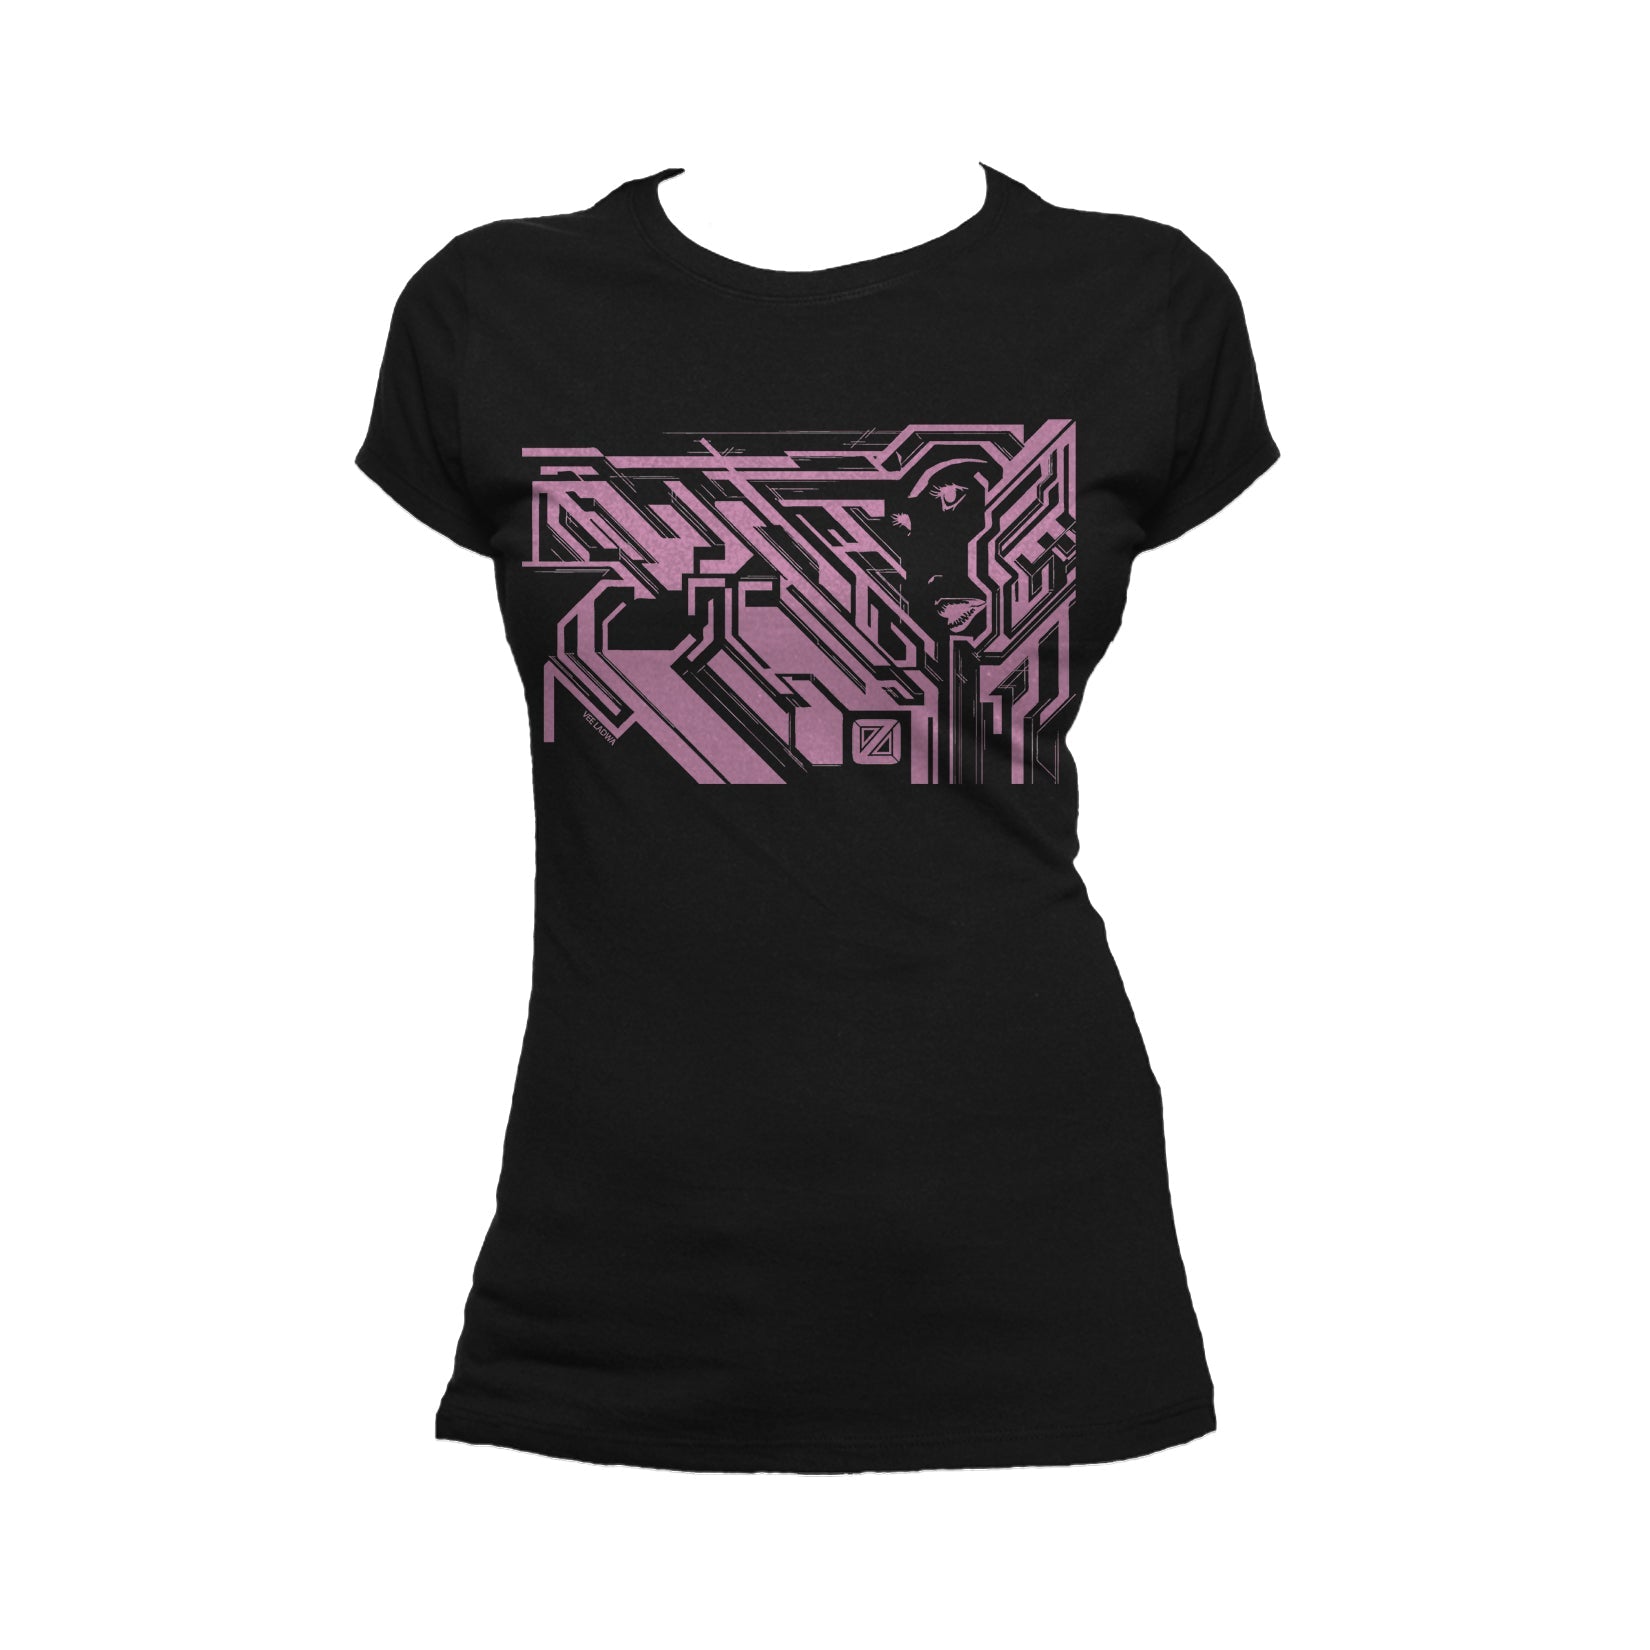 US Brand X Sci Funk Hi Tek Official Women's T-Shirt ()